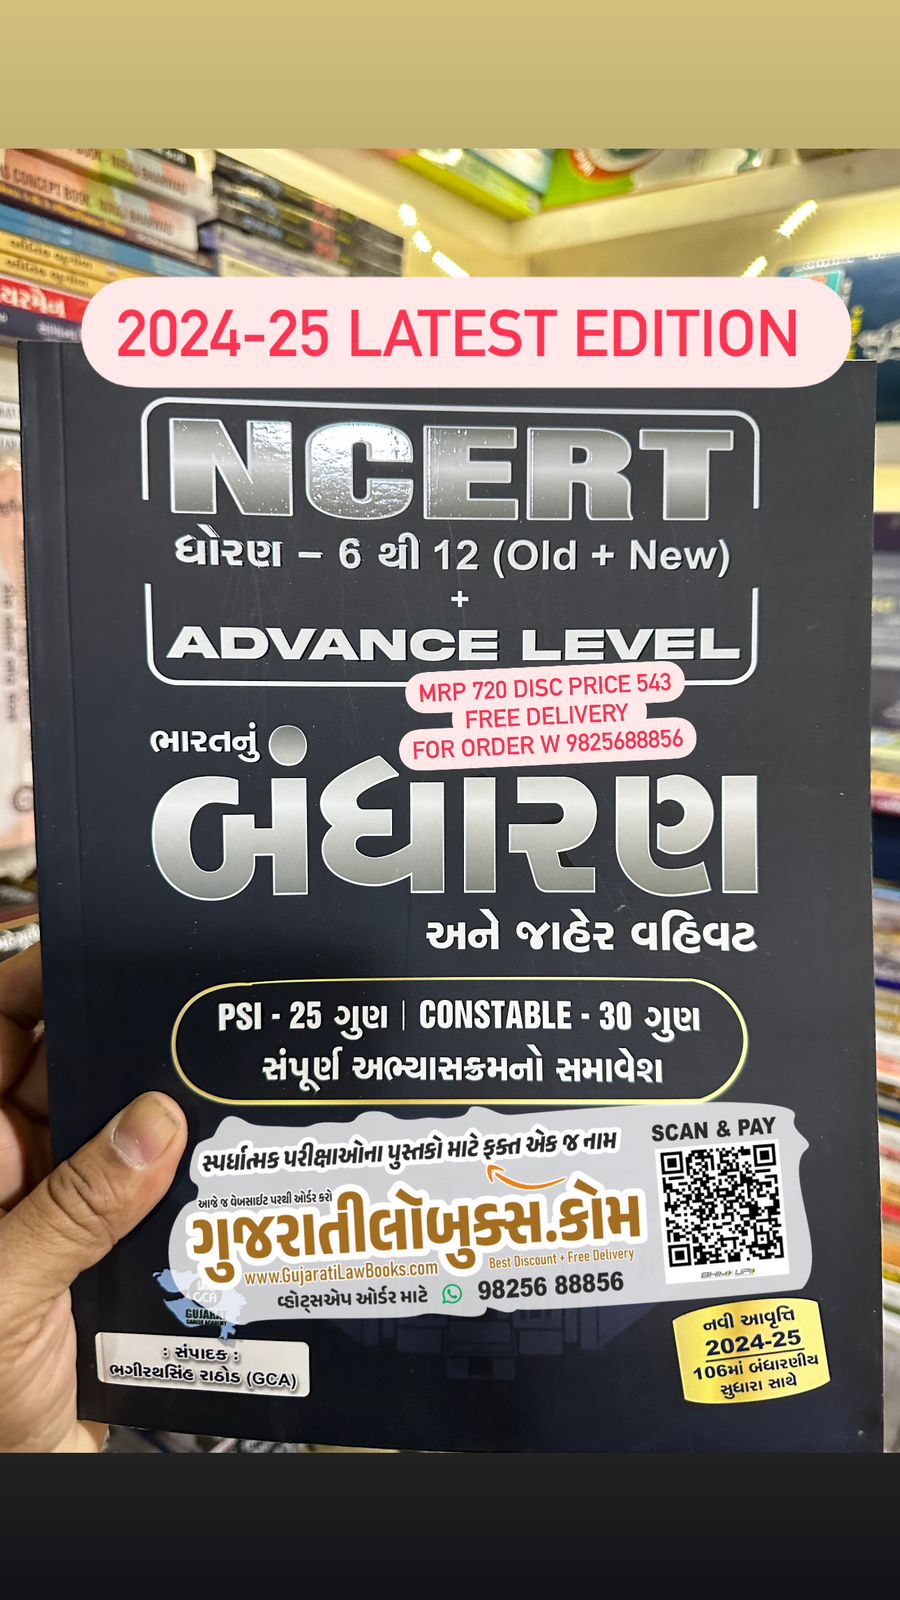 NCERT Dhoran 6 to 12 (New + Old) Advance Level - Bharat Nu Bandharan ane Jaher Vahivat by Bhagirathsinh Rathod - Latest May 2024-25 Edition